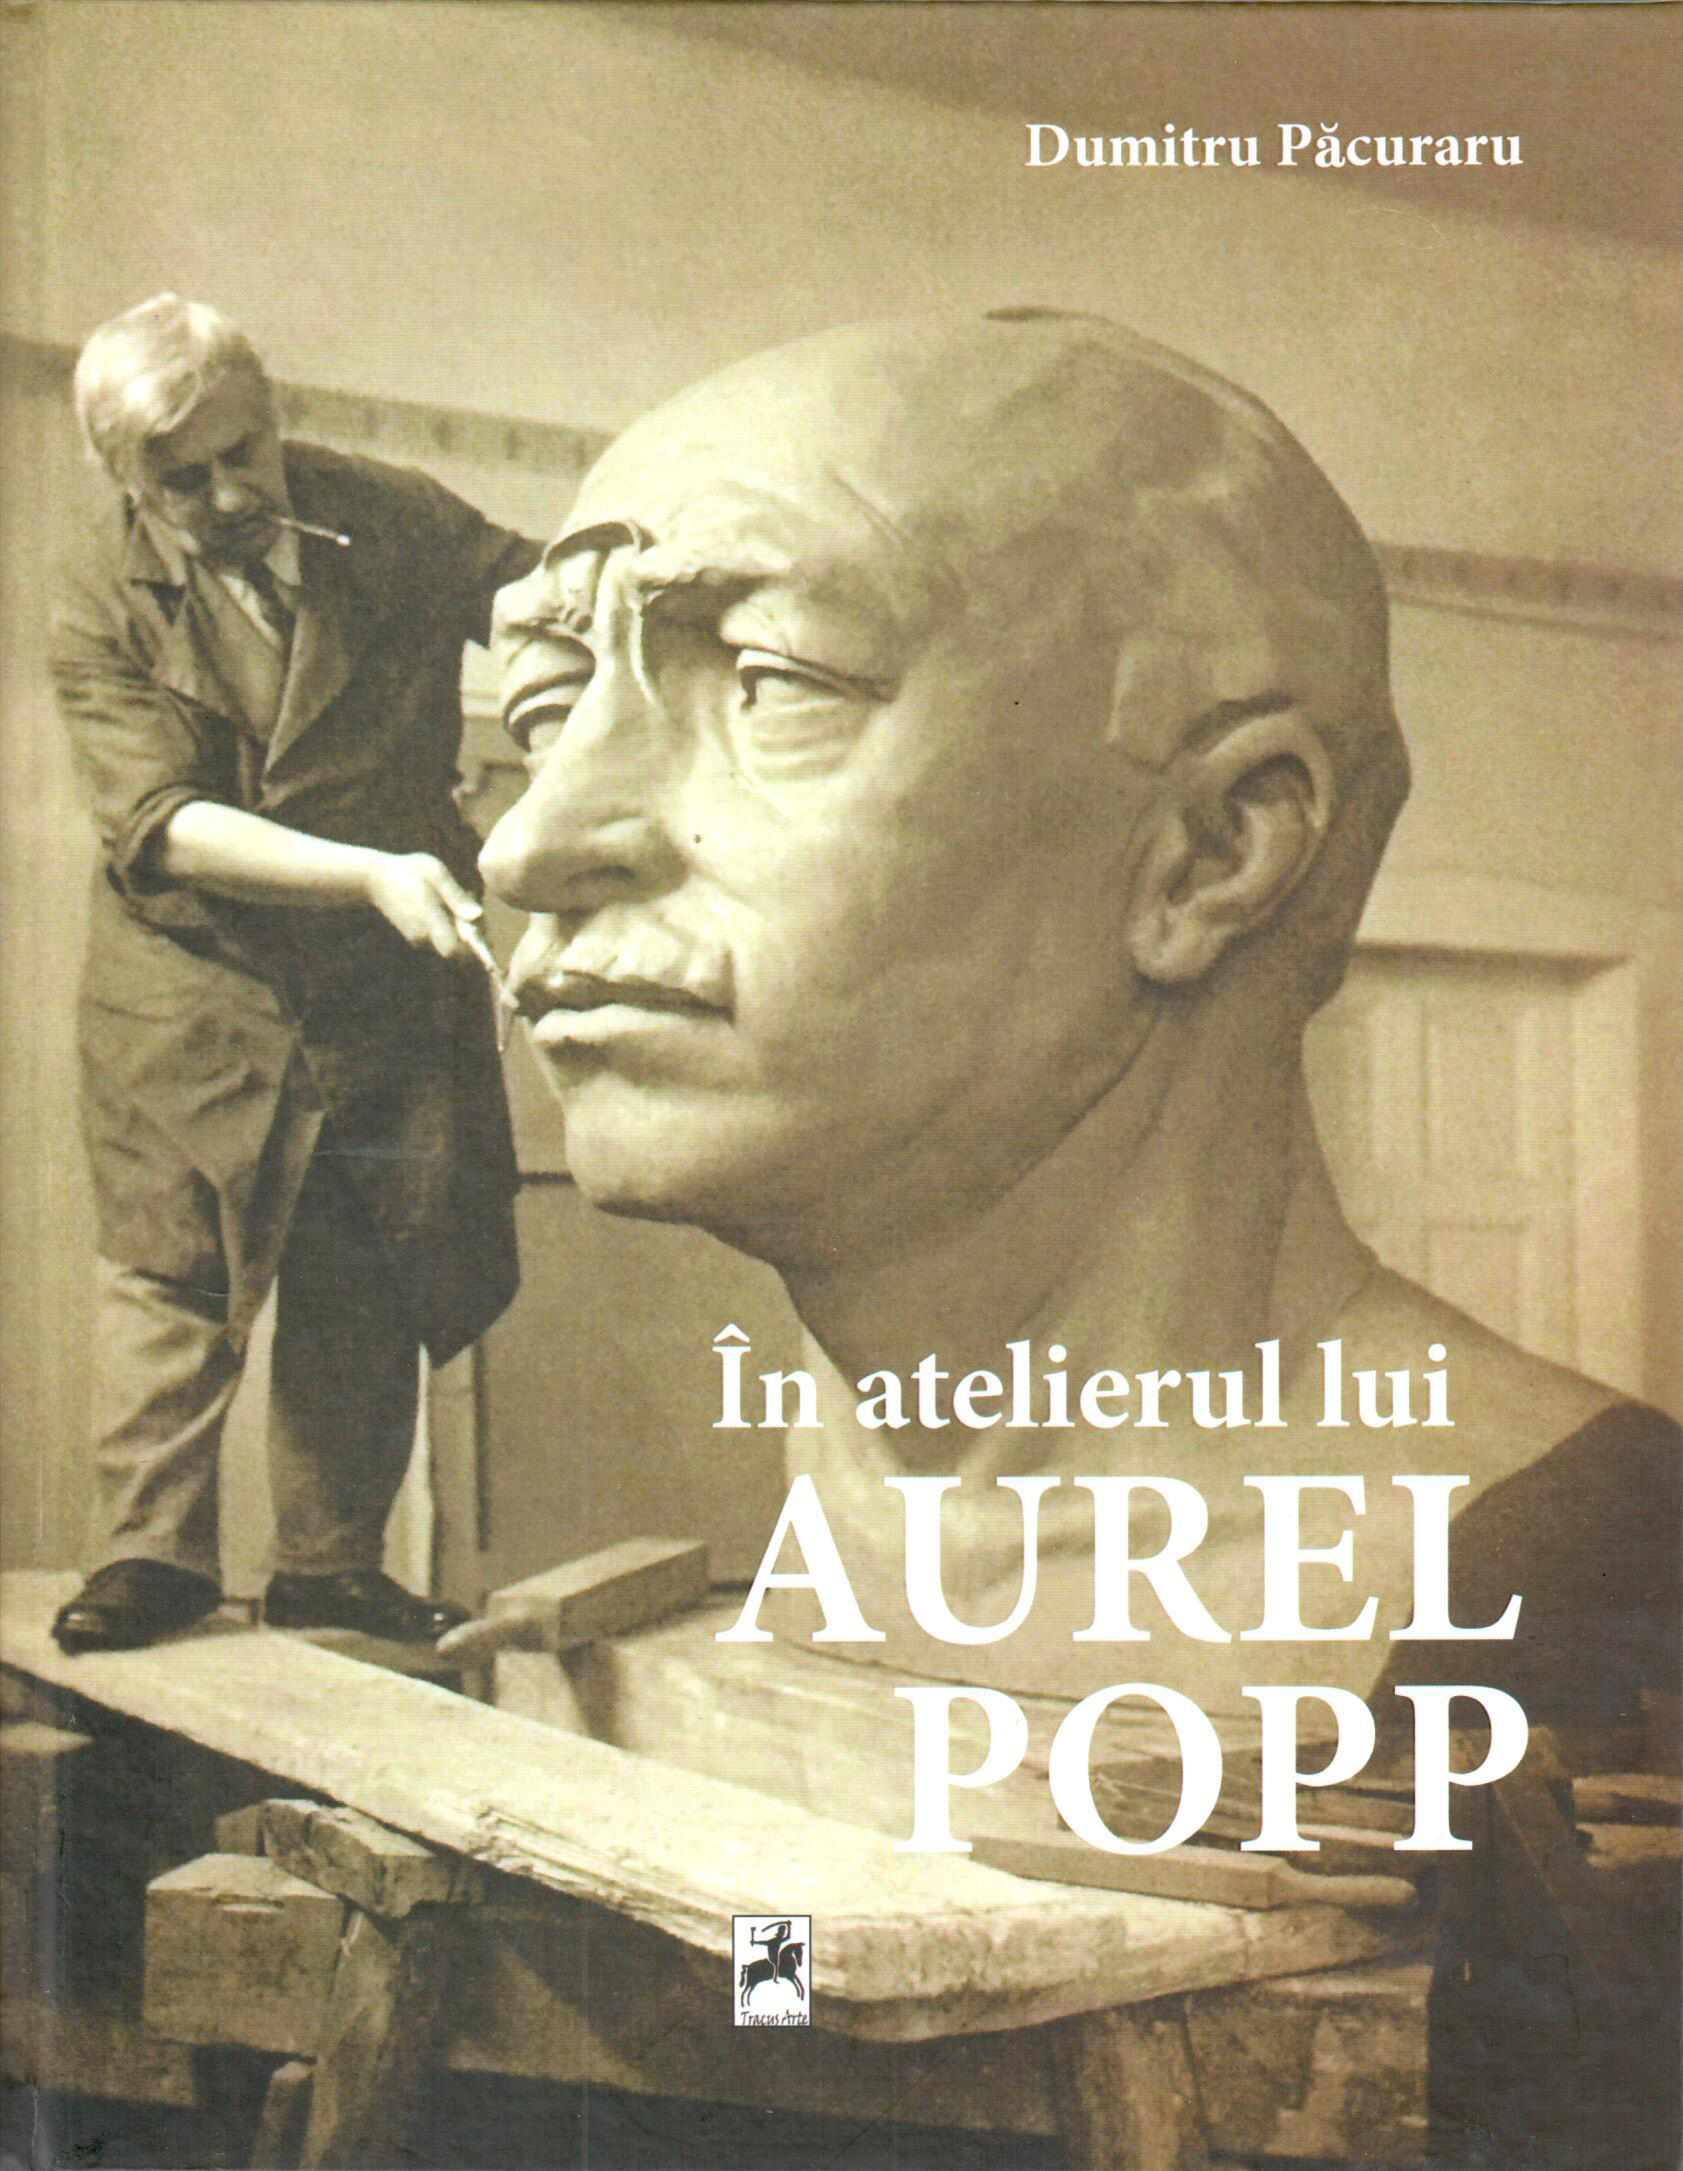 In atelierul lui Aurel Popp | Dumitru Pacuraru carturesti.ro poza bestsellers.ro